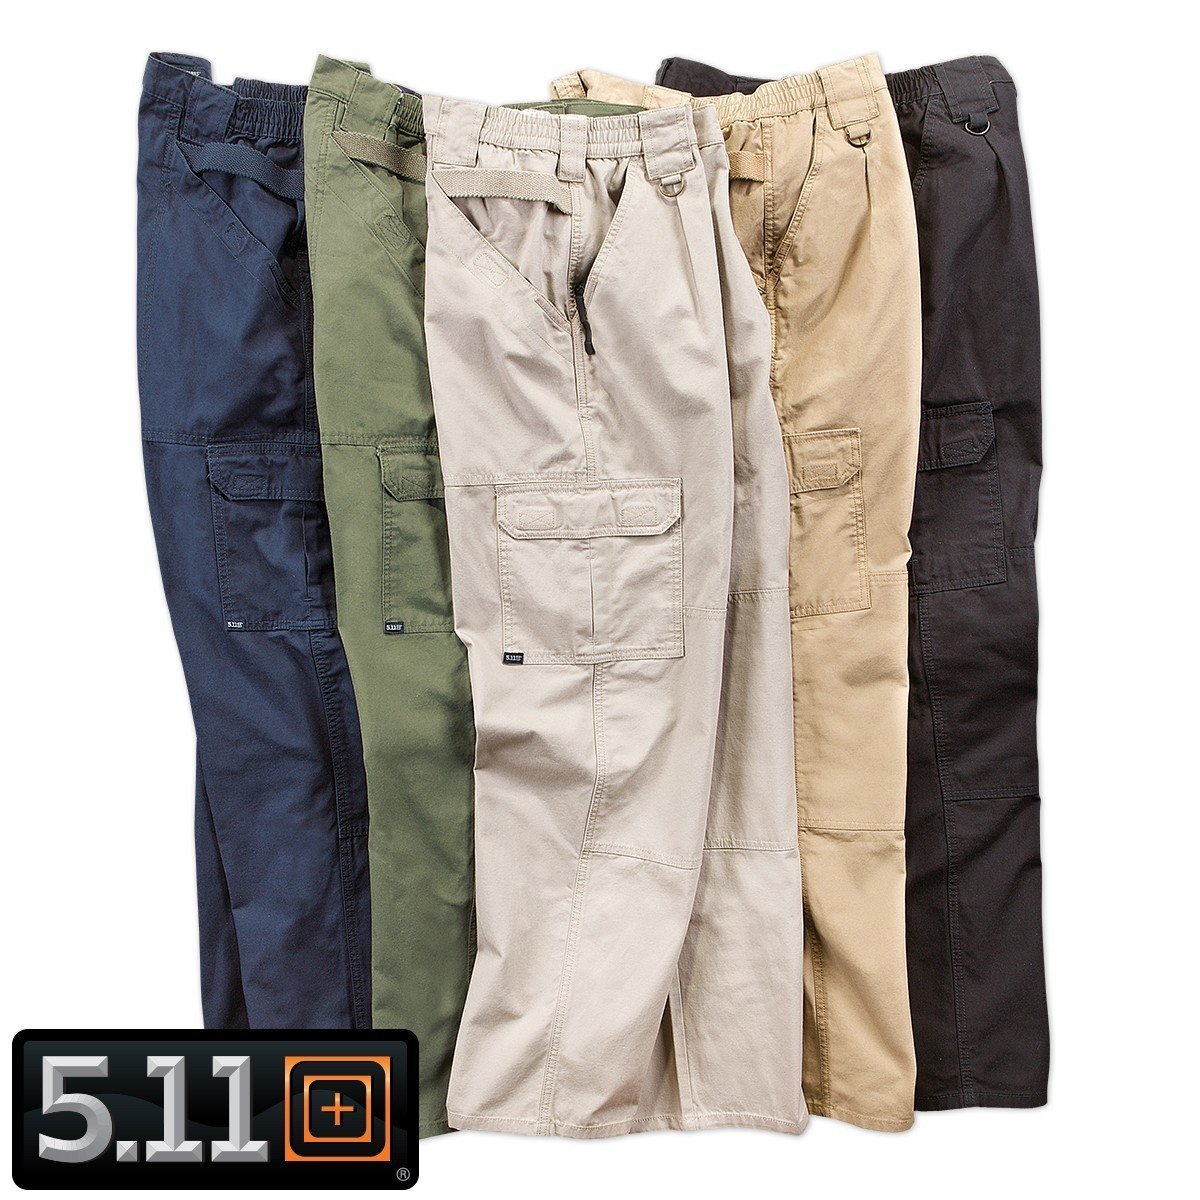 5.11 Tactical 5.11 Tactical Cotton Canvas Pants 74251 Men's W30/L32 Khaki Tan 